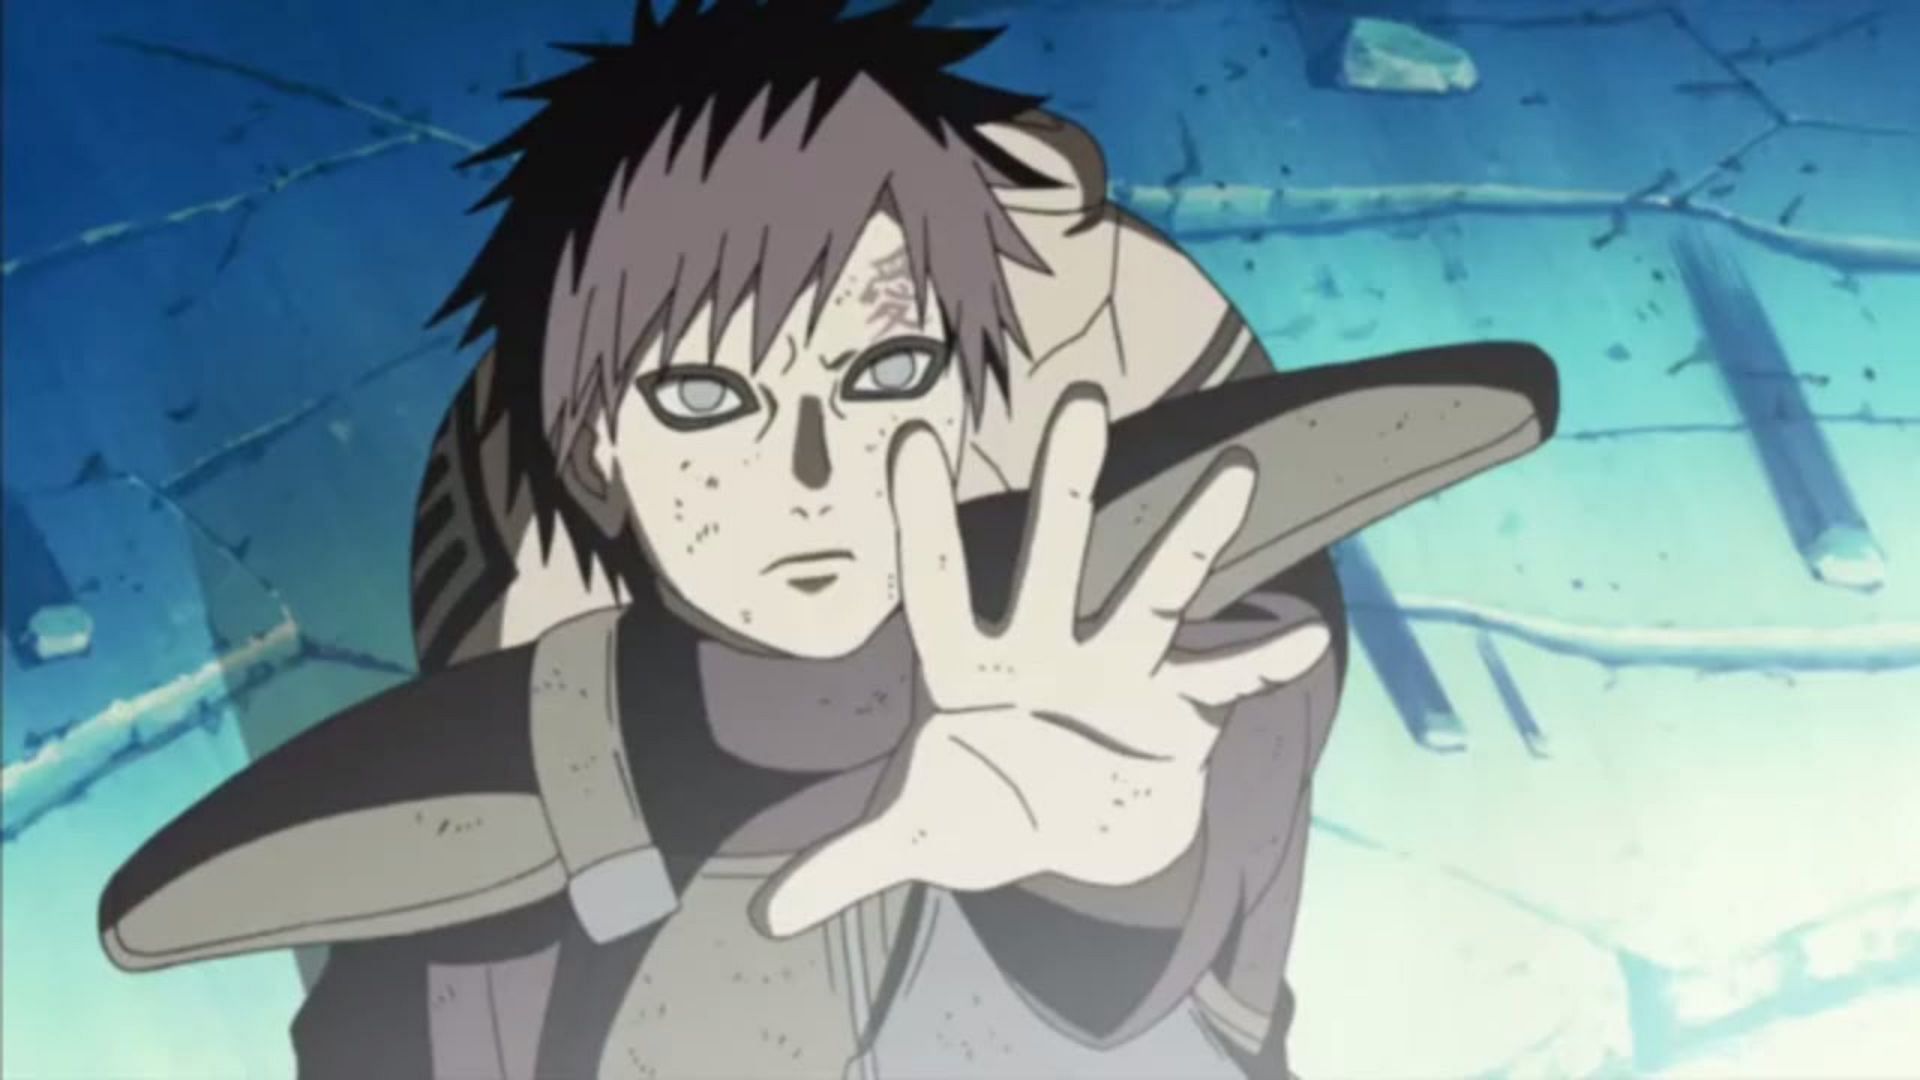 Gaara as seen in Naruto Shippuden (Image via Studio Pierrot)